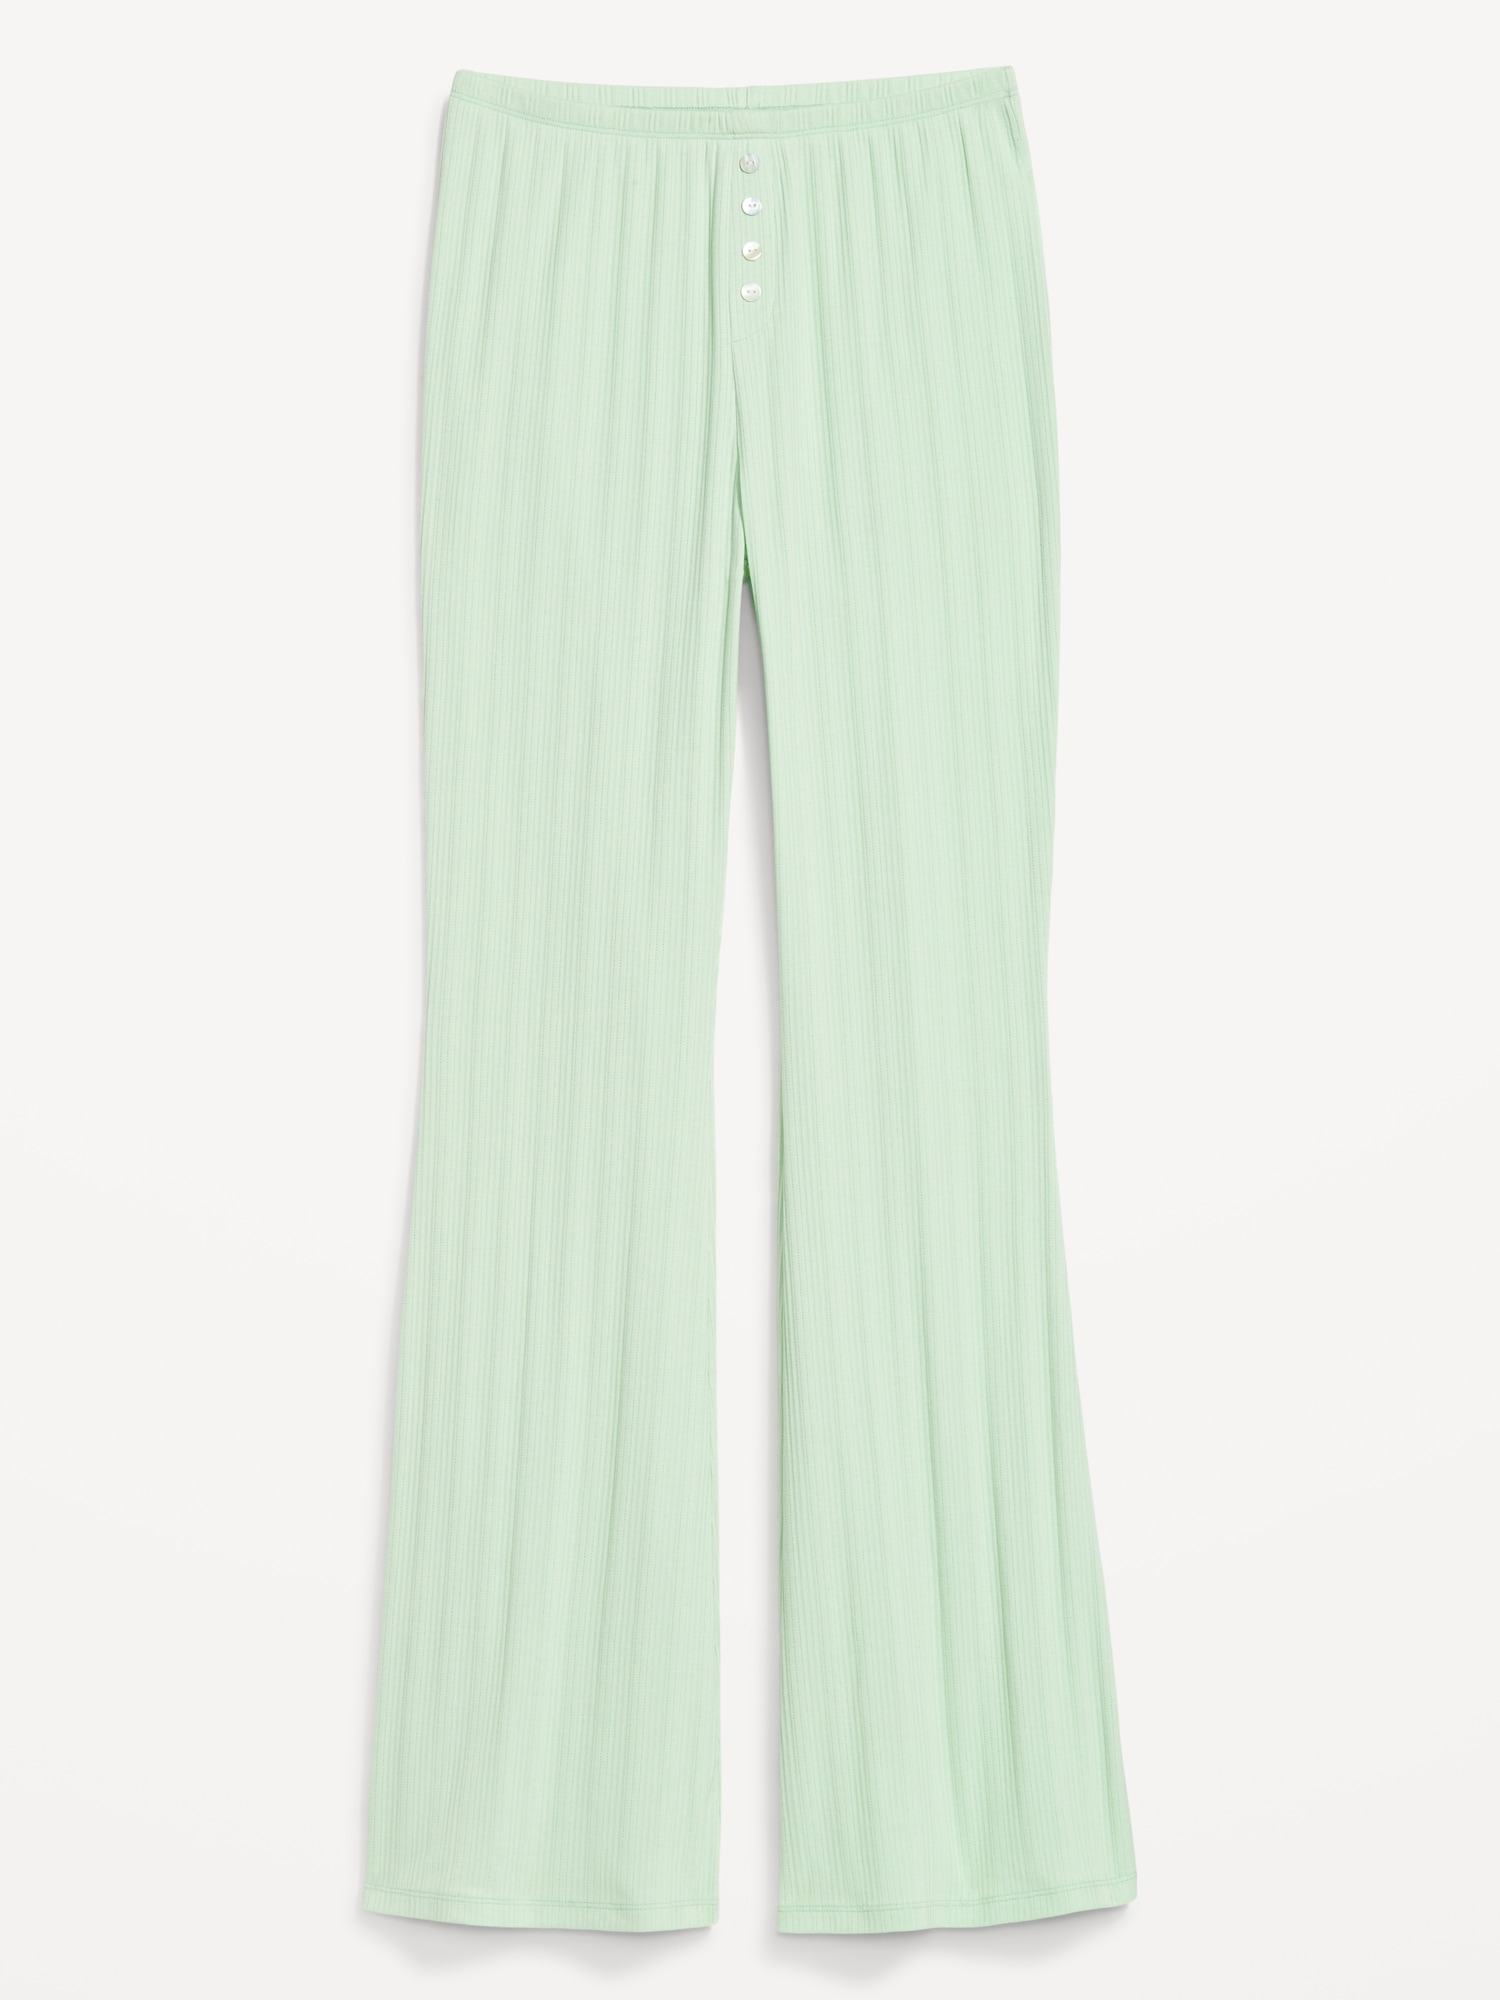 NWT Old Navy Lime Green Stripe Thermal Knit Pajama Pants Sleep